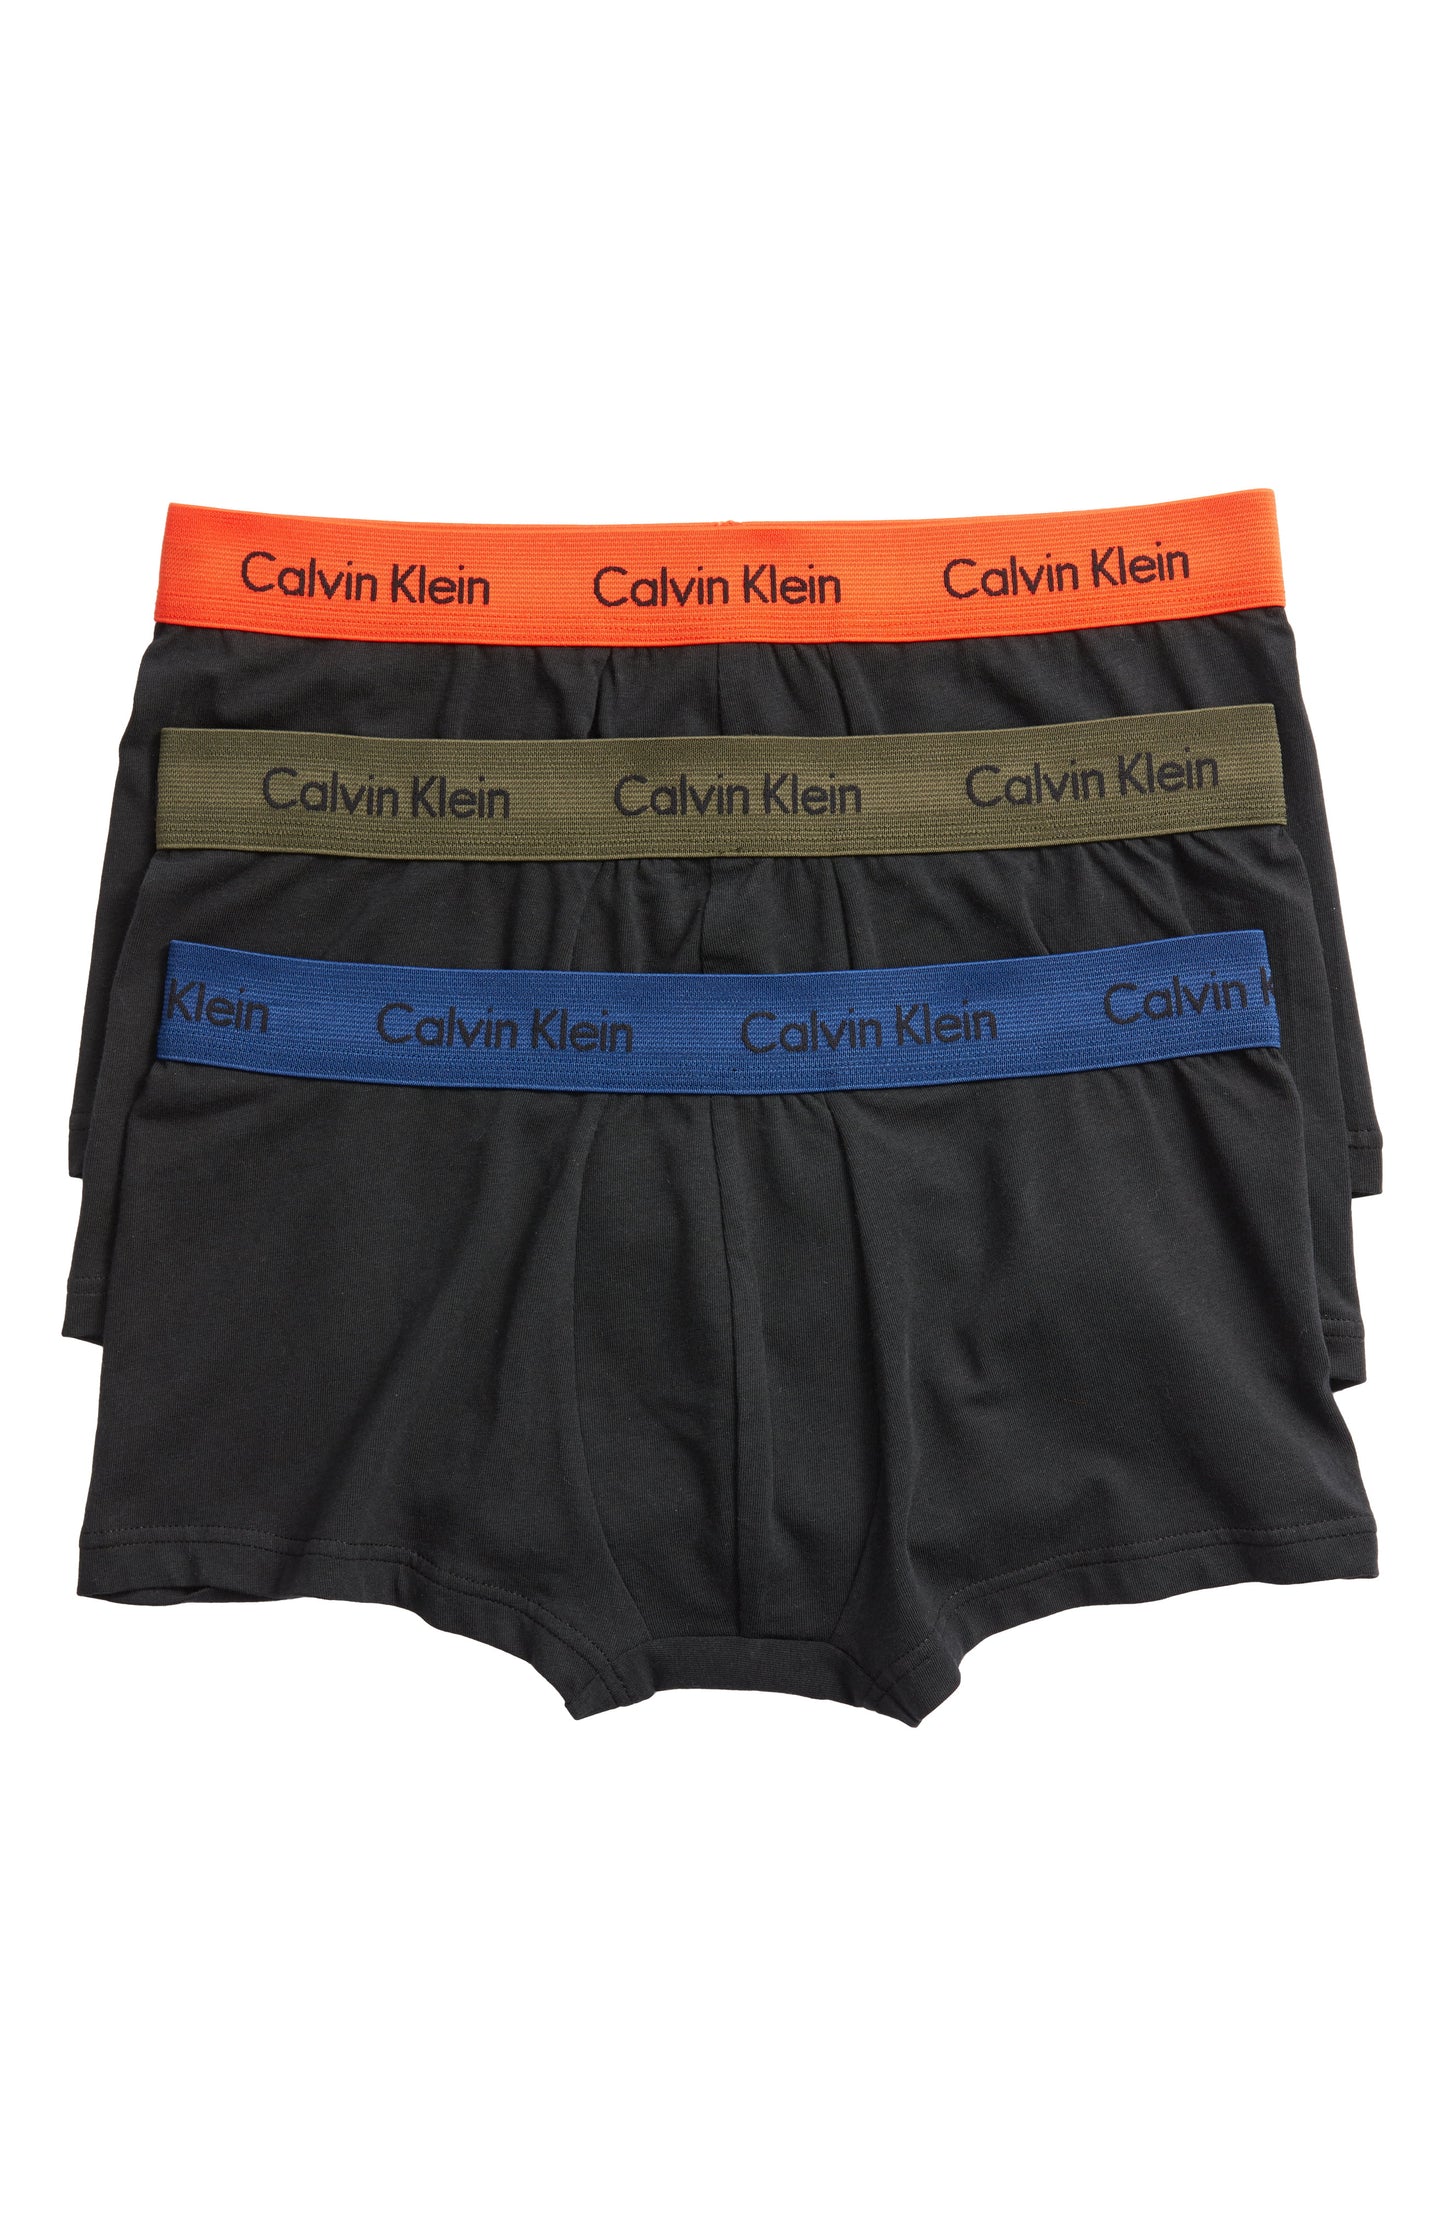 Calvin Klein Men's 3-Pack Stretch Cotton Low Rise Trunks